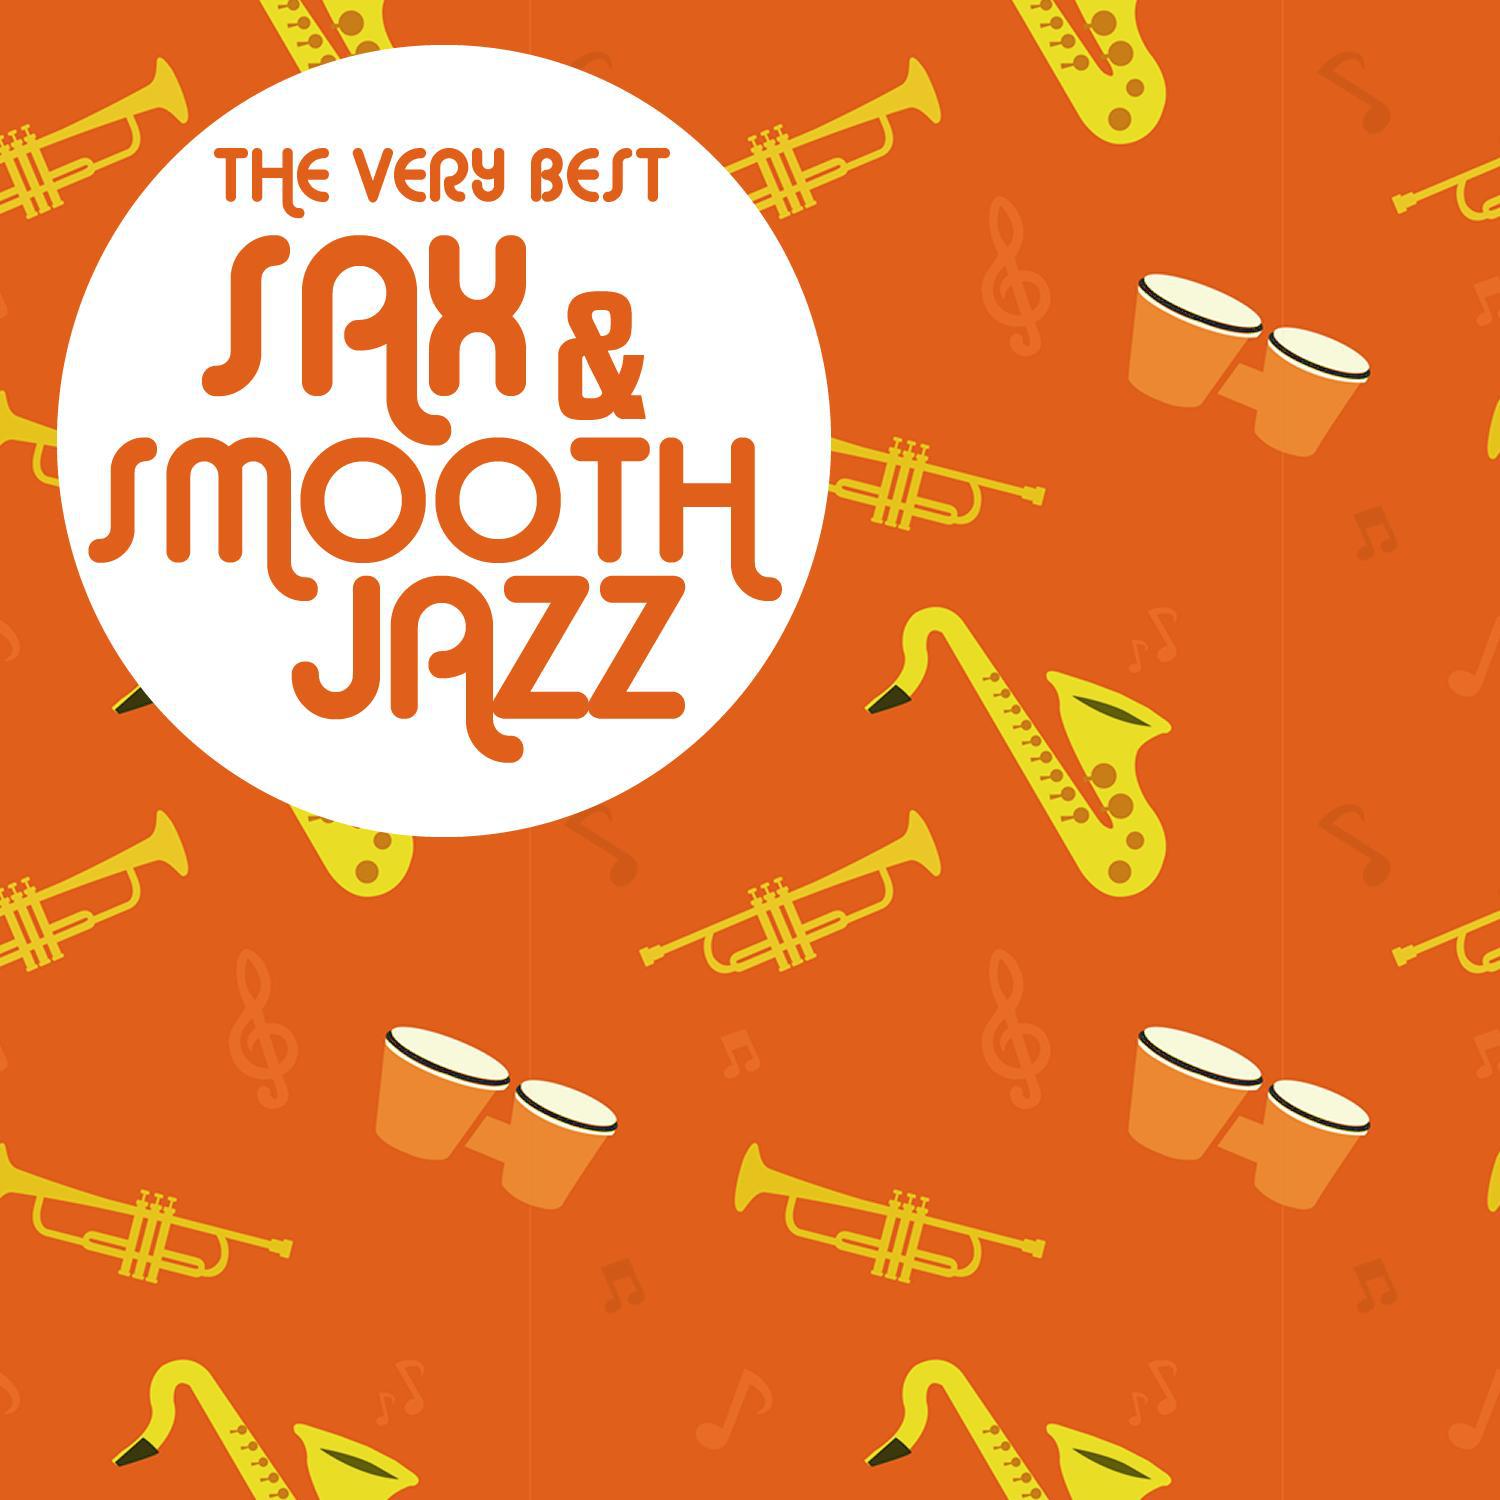 The Very Best Sax & Smooth Jazz